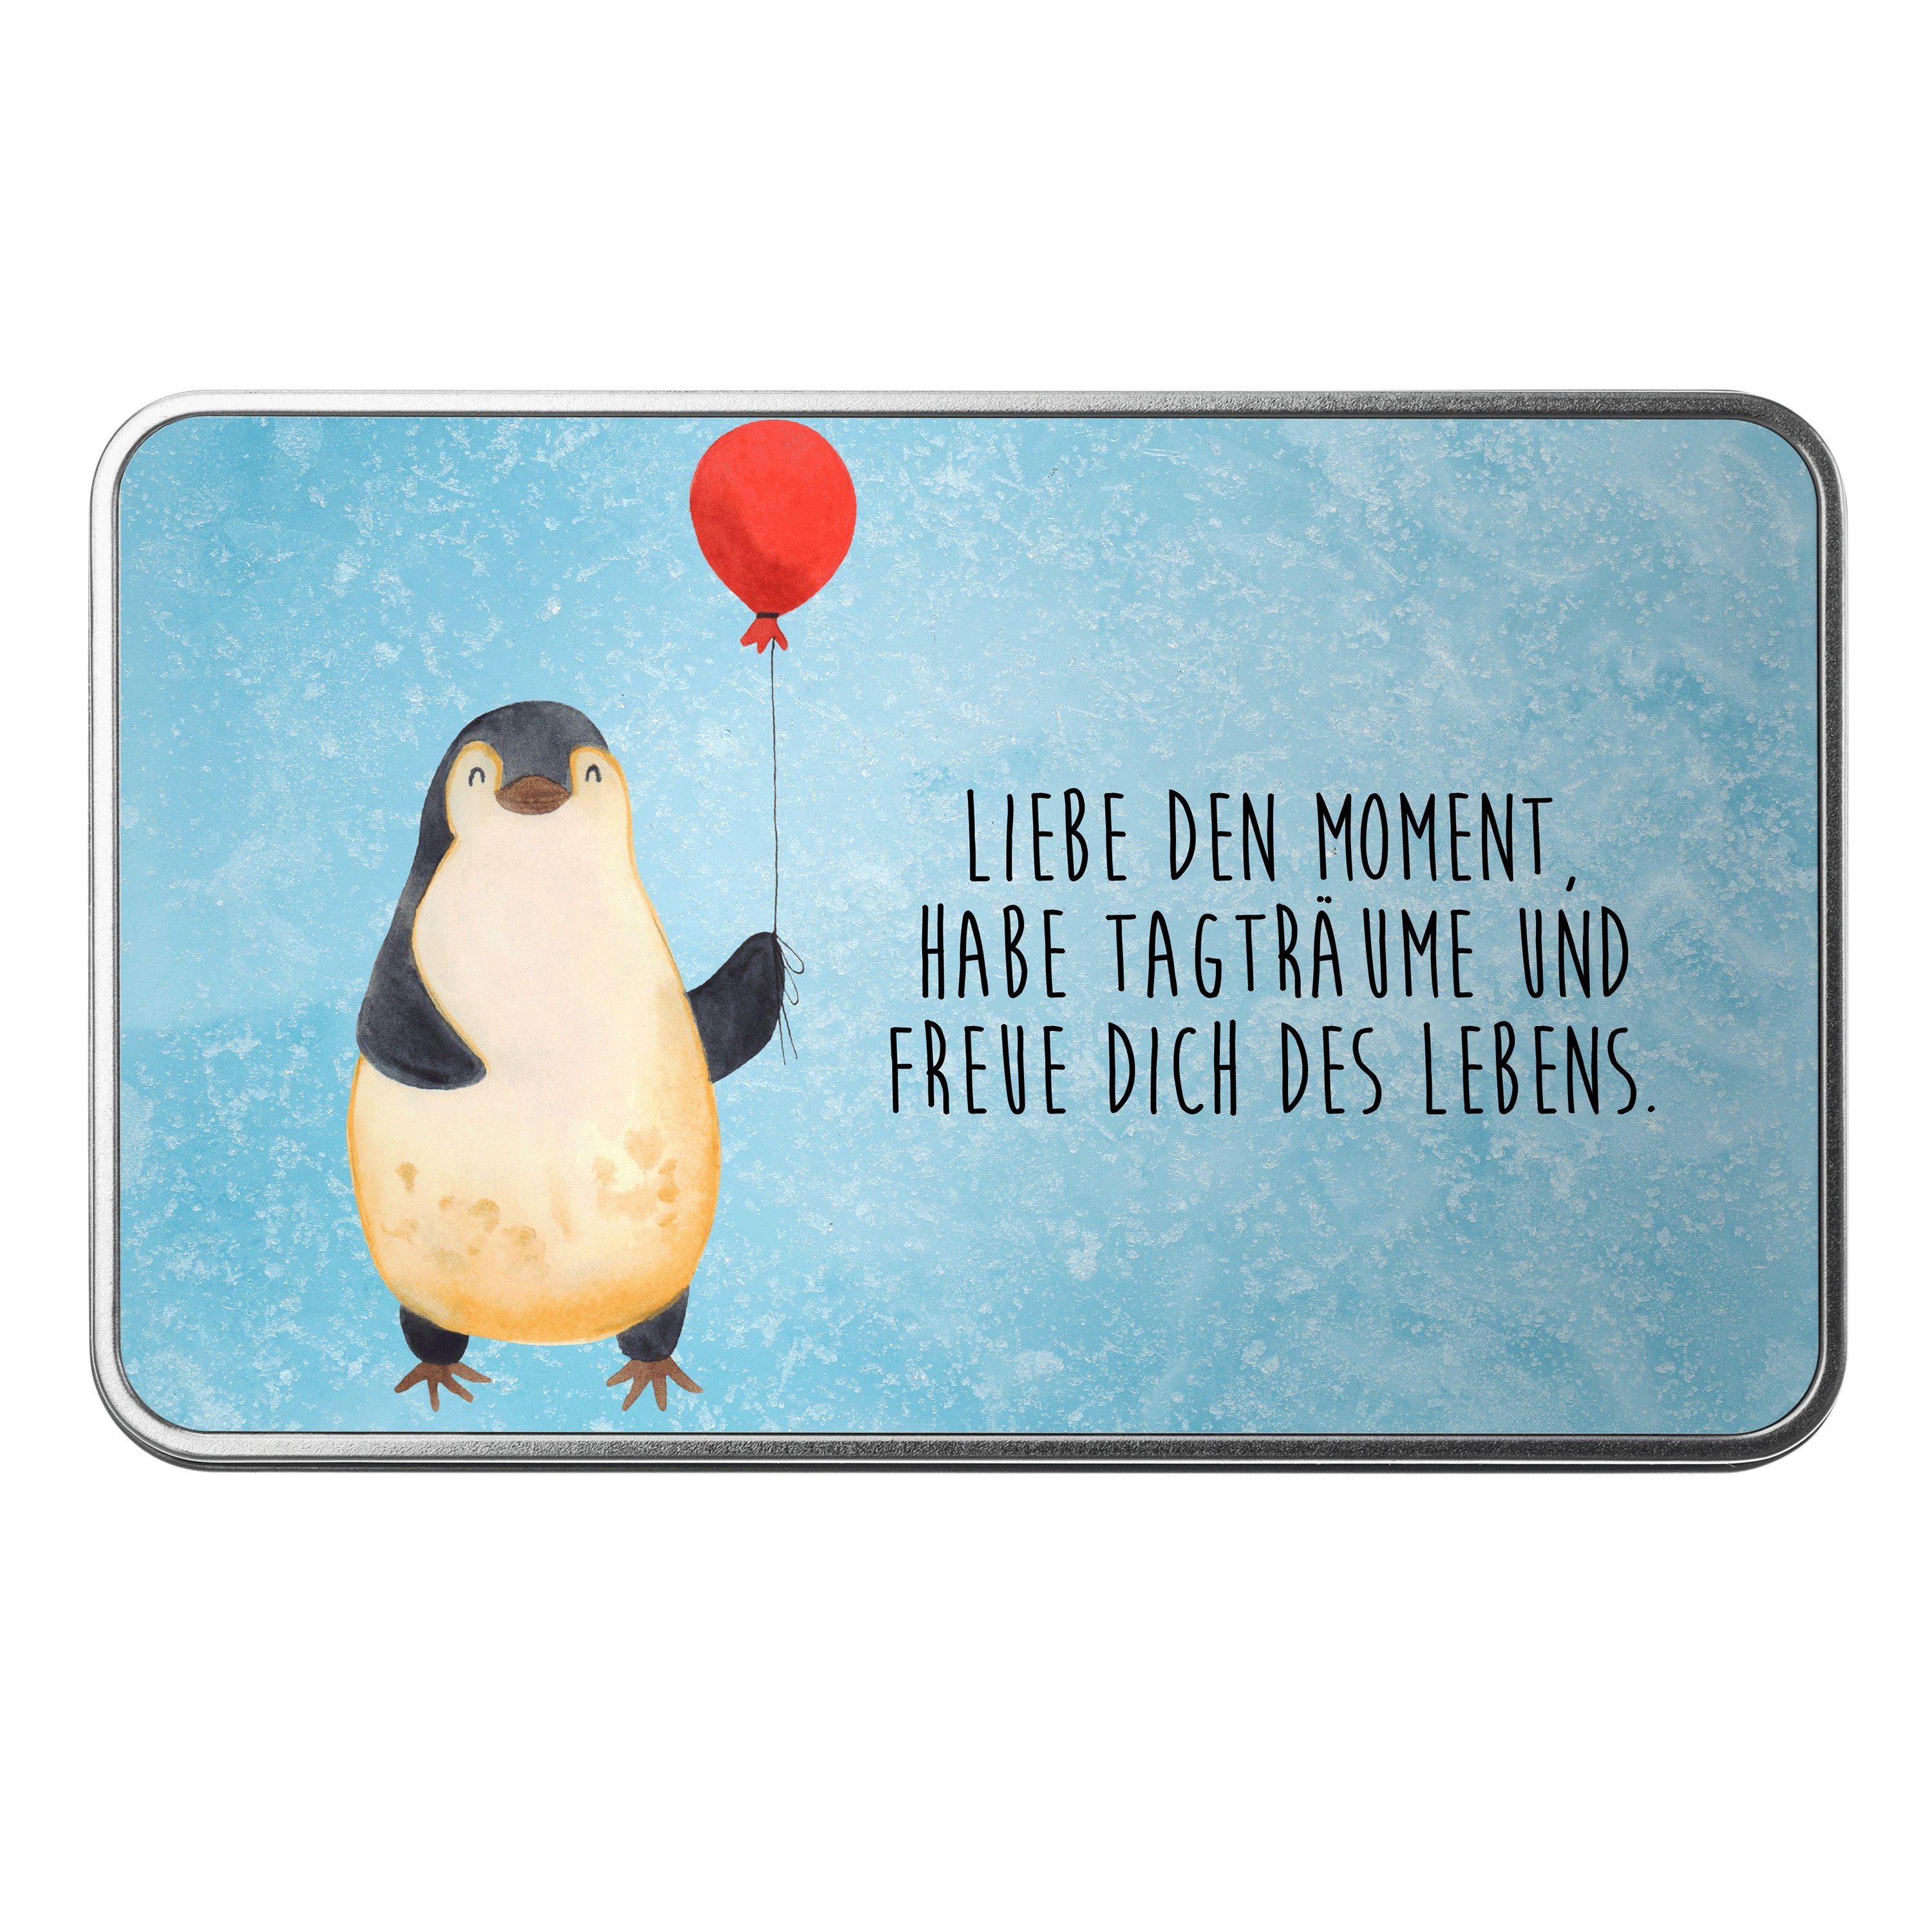 Mr. & Mrs. Alum Luftballon - Dose Vorratsbox, Eisblau Metalldose, St) Panda (1 Geschenk, - Pinguin